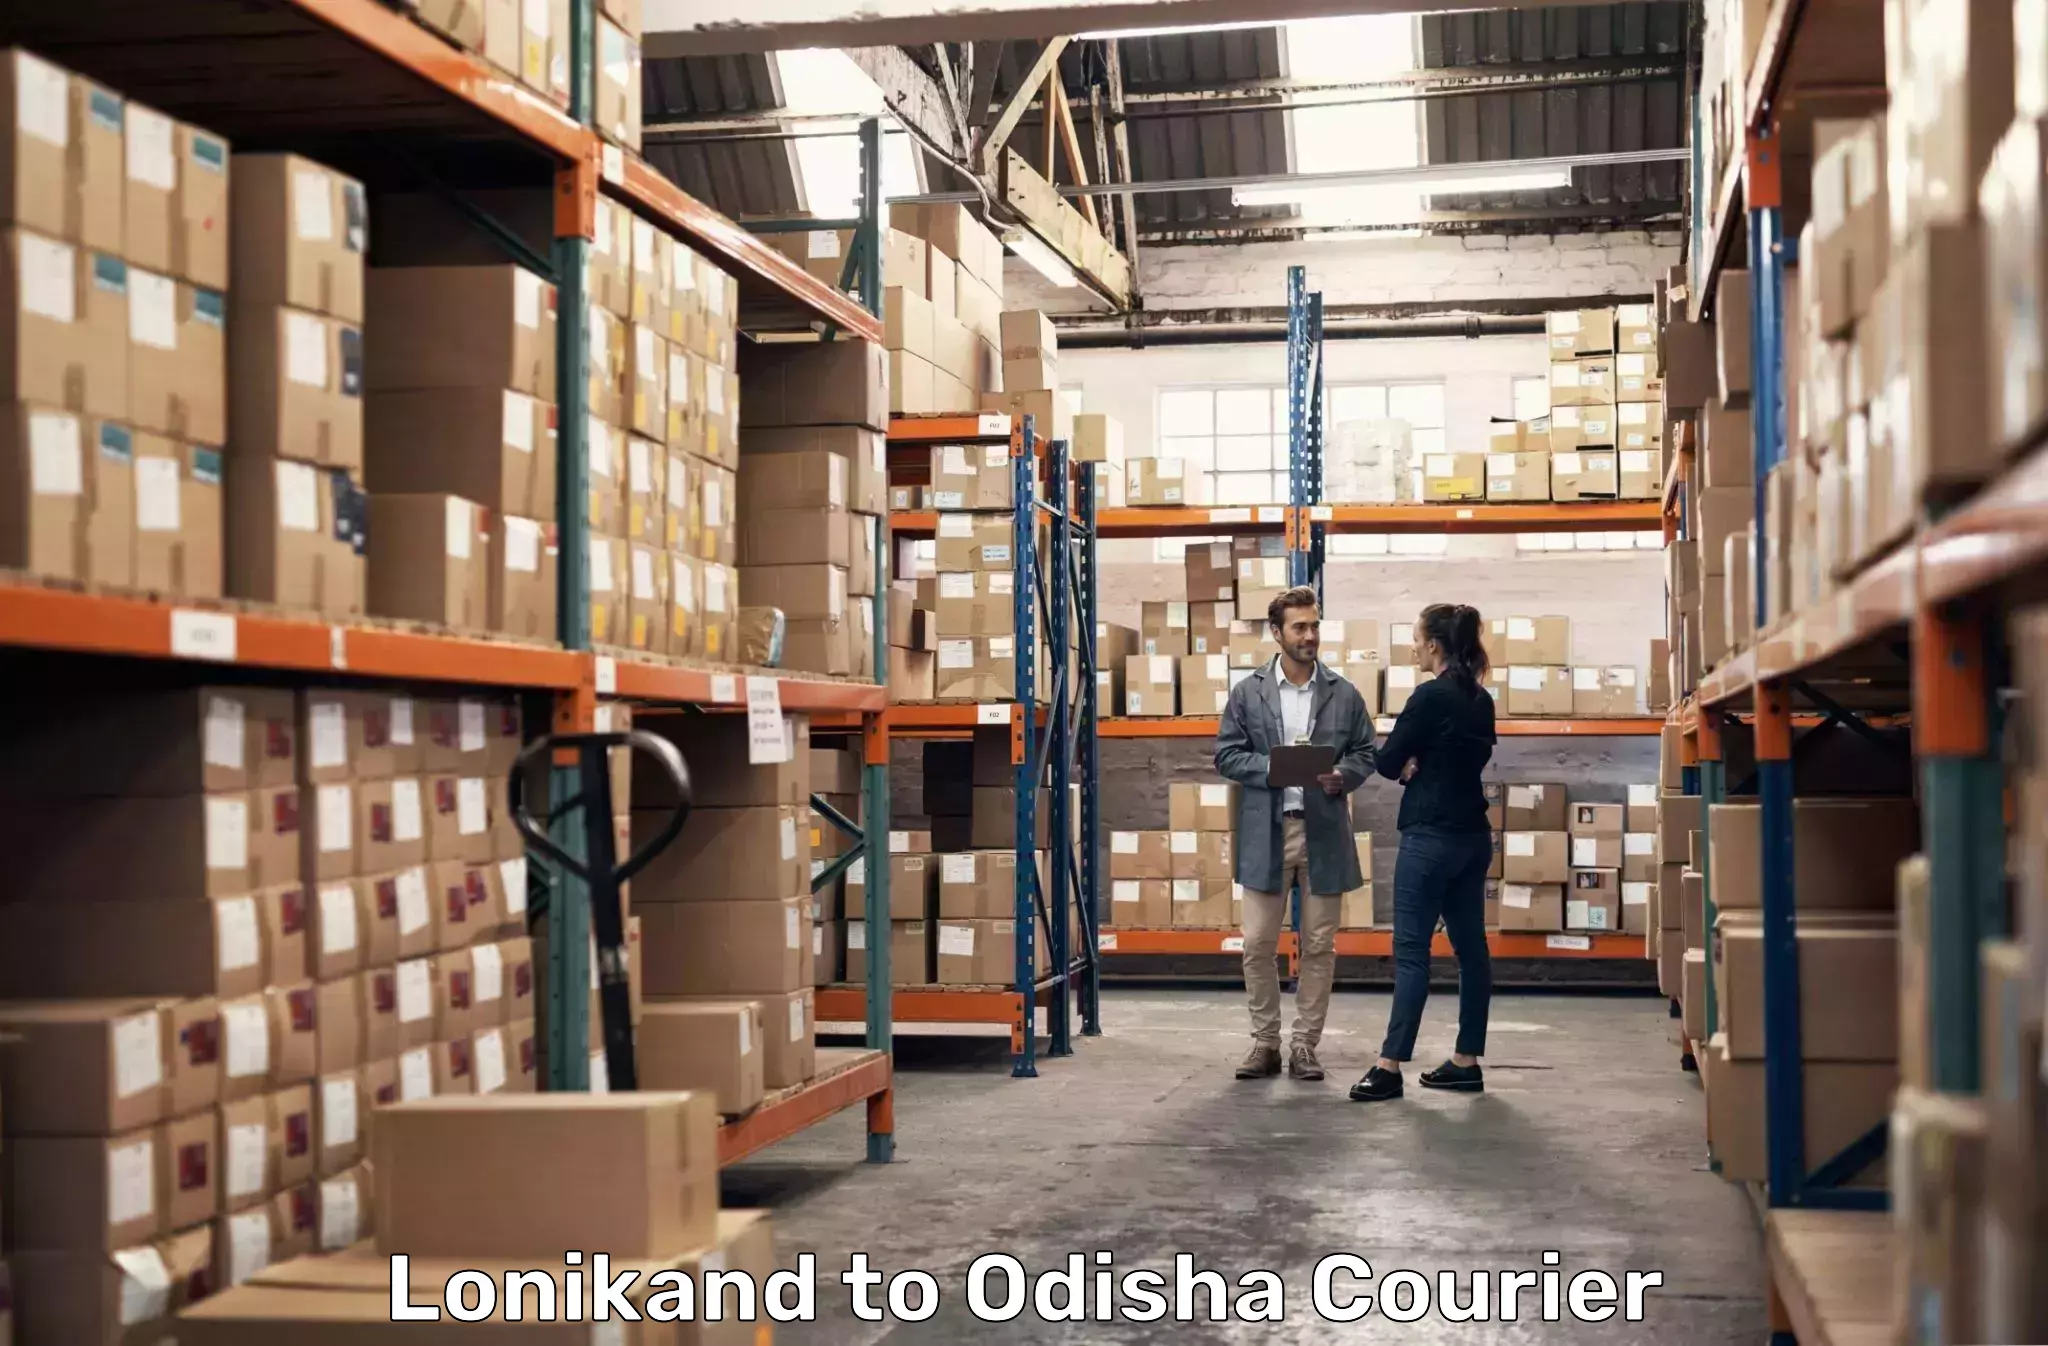 Courier service comparison Lonikand to Birmaharajpur